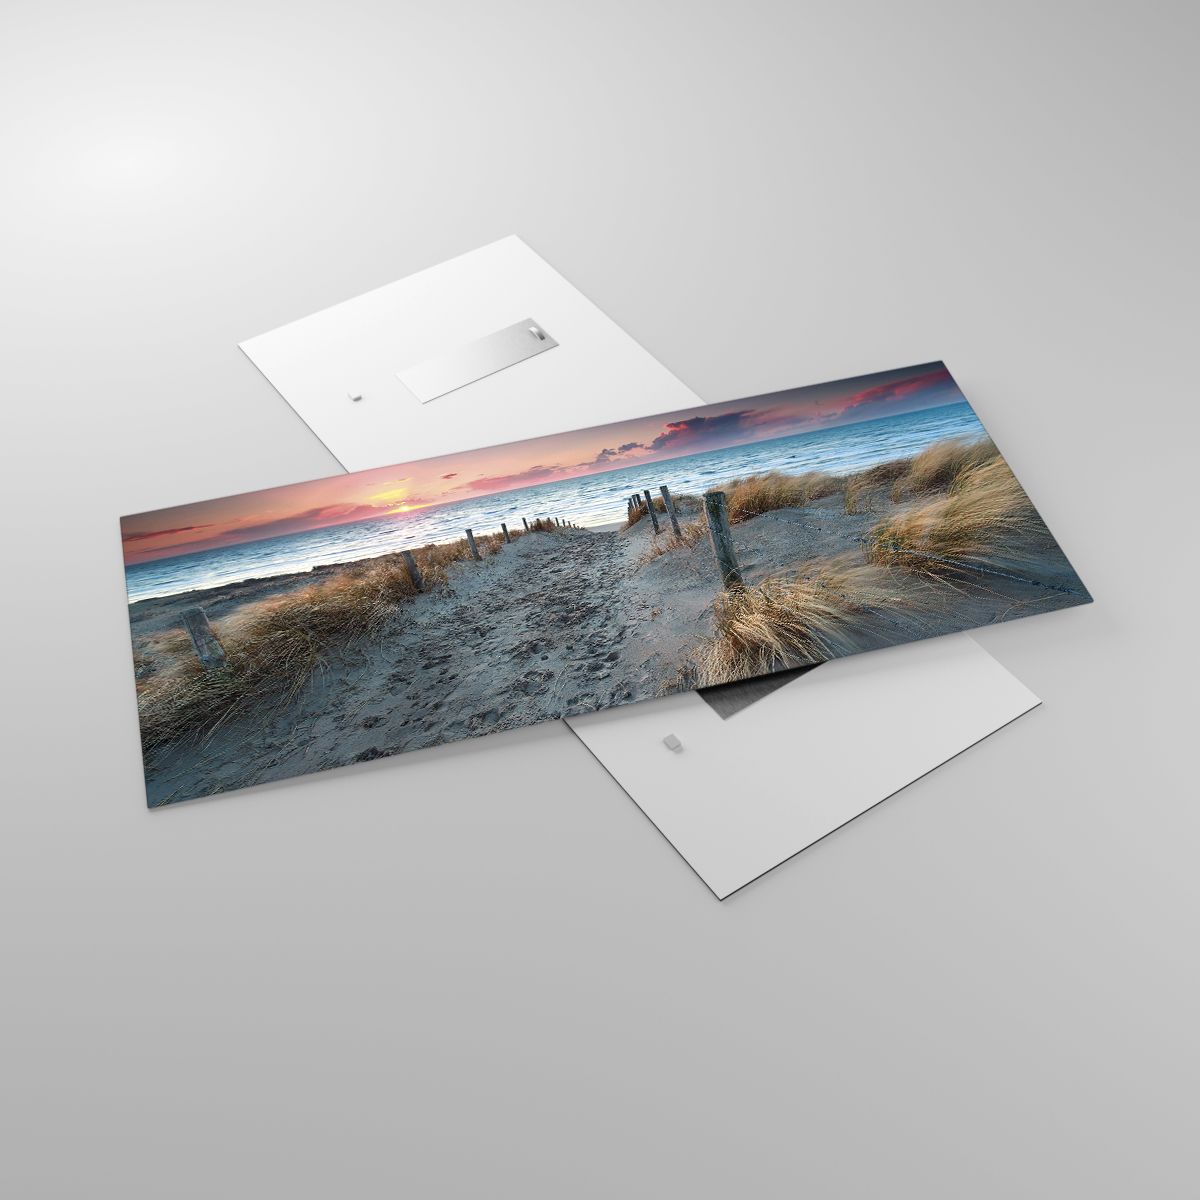 Glasbild Landschaft, Glasbild Meer, Glasbild Strand, Glasbild Düne, Glasbild Der Sonnenuntergang